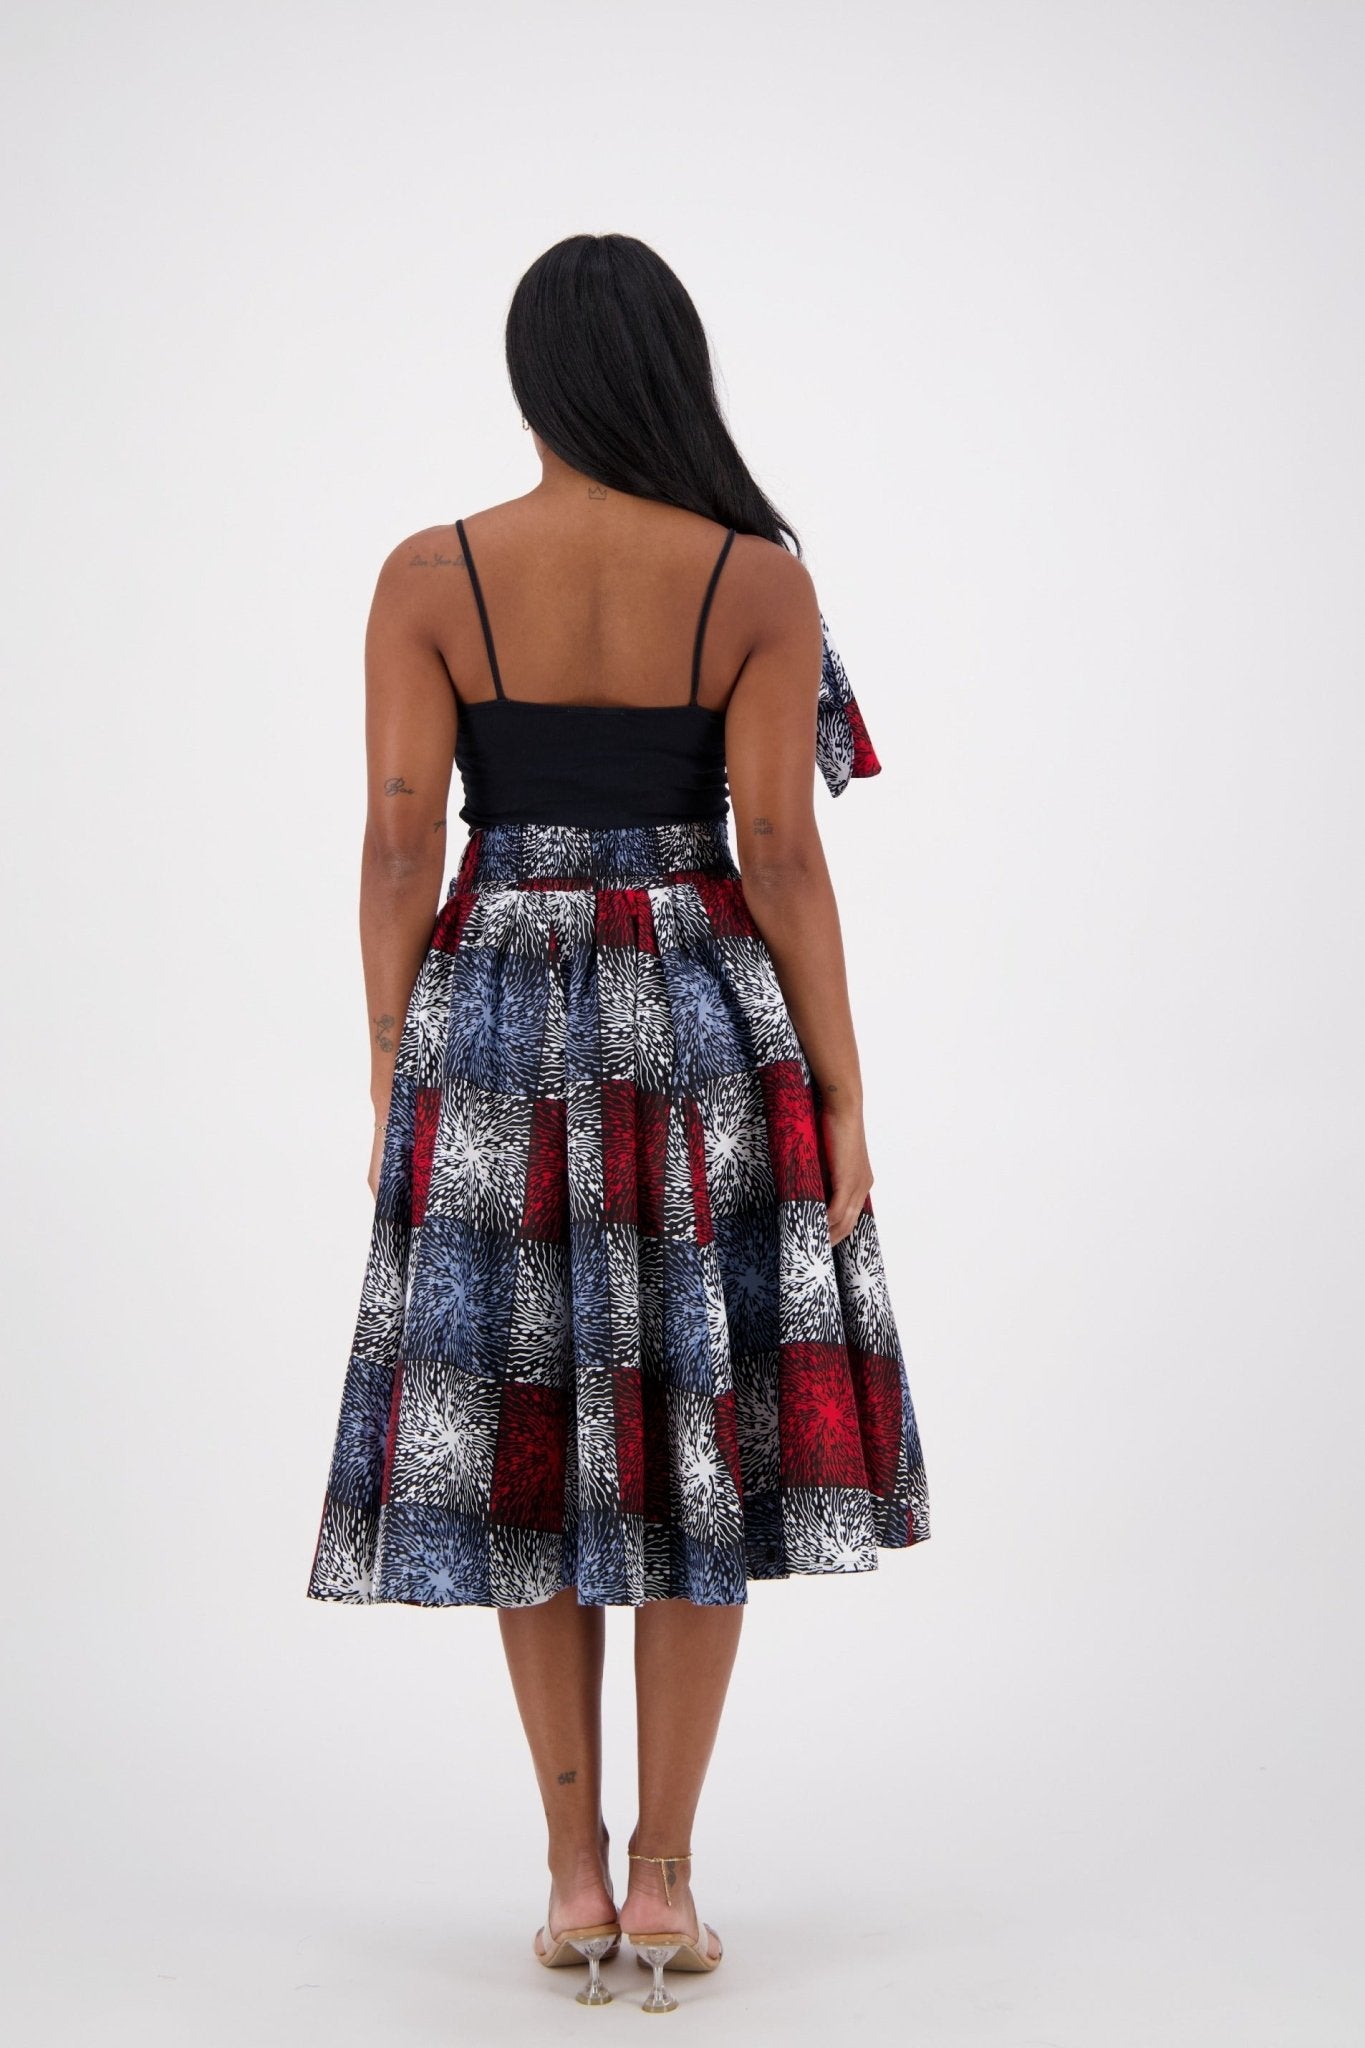 Mid-Length African Print Skirt 16321-241 - Advance Apparels Inc